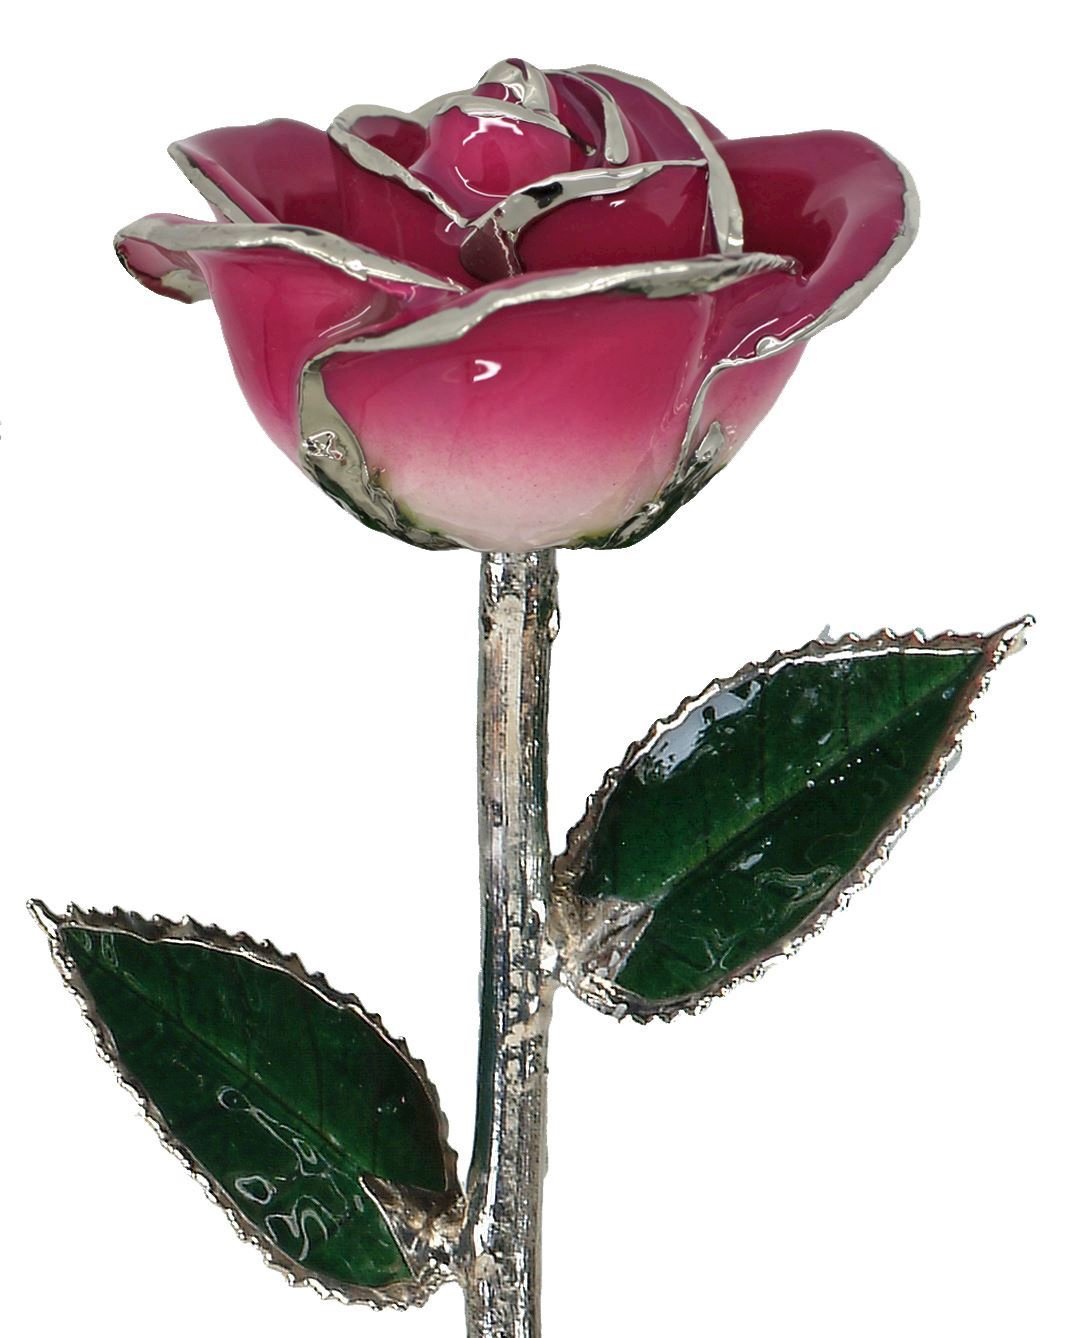 https://www.arthursjewelers.com/content/images/thumbs/Original/platinum-white-pink-rose_1-19362244.jpeg